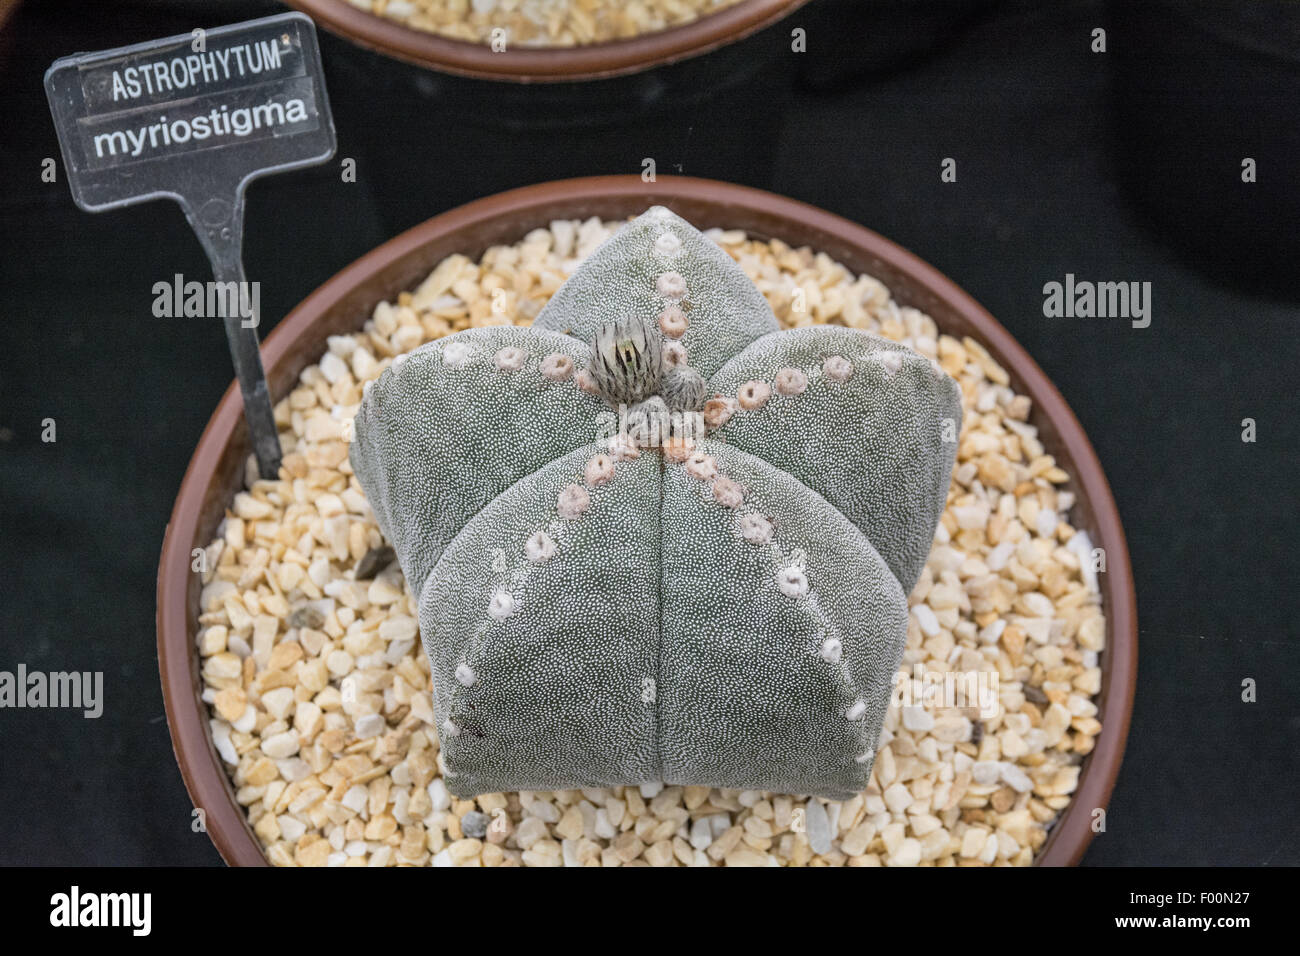 Astrophytum myriostigma cactus Foto de stock